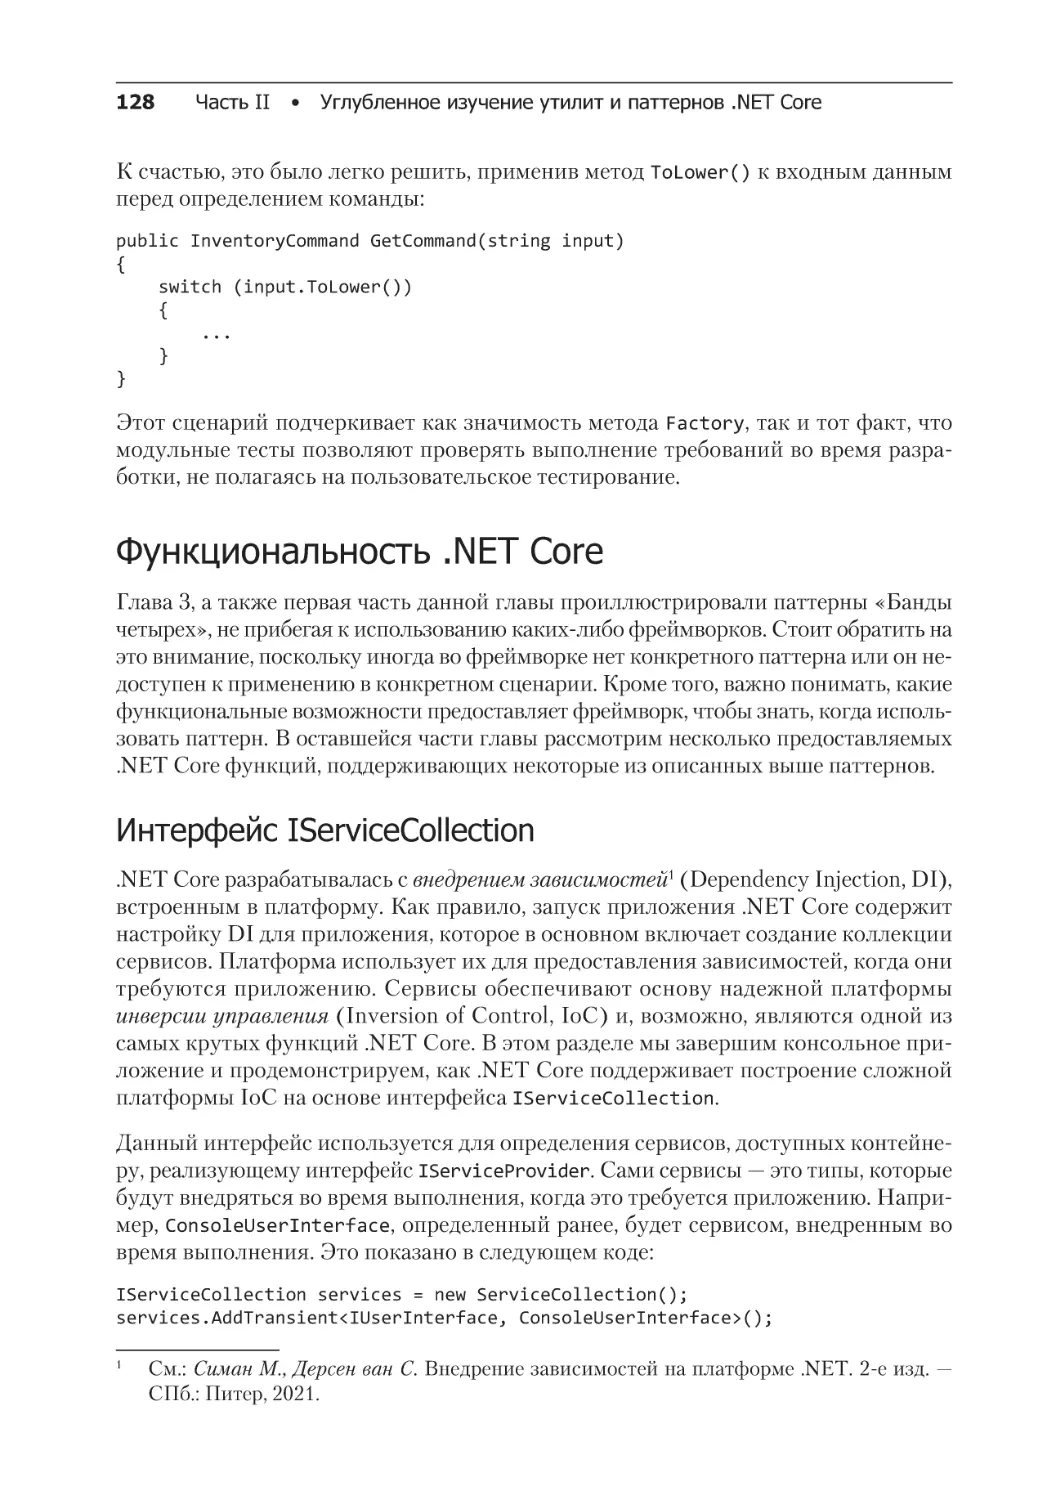 Функциональность .NET Core
Интерфейс IServiceCollection